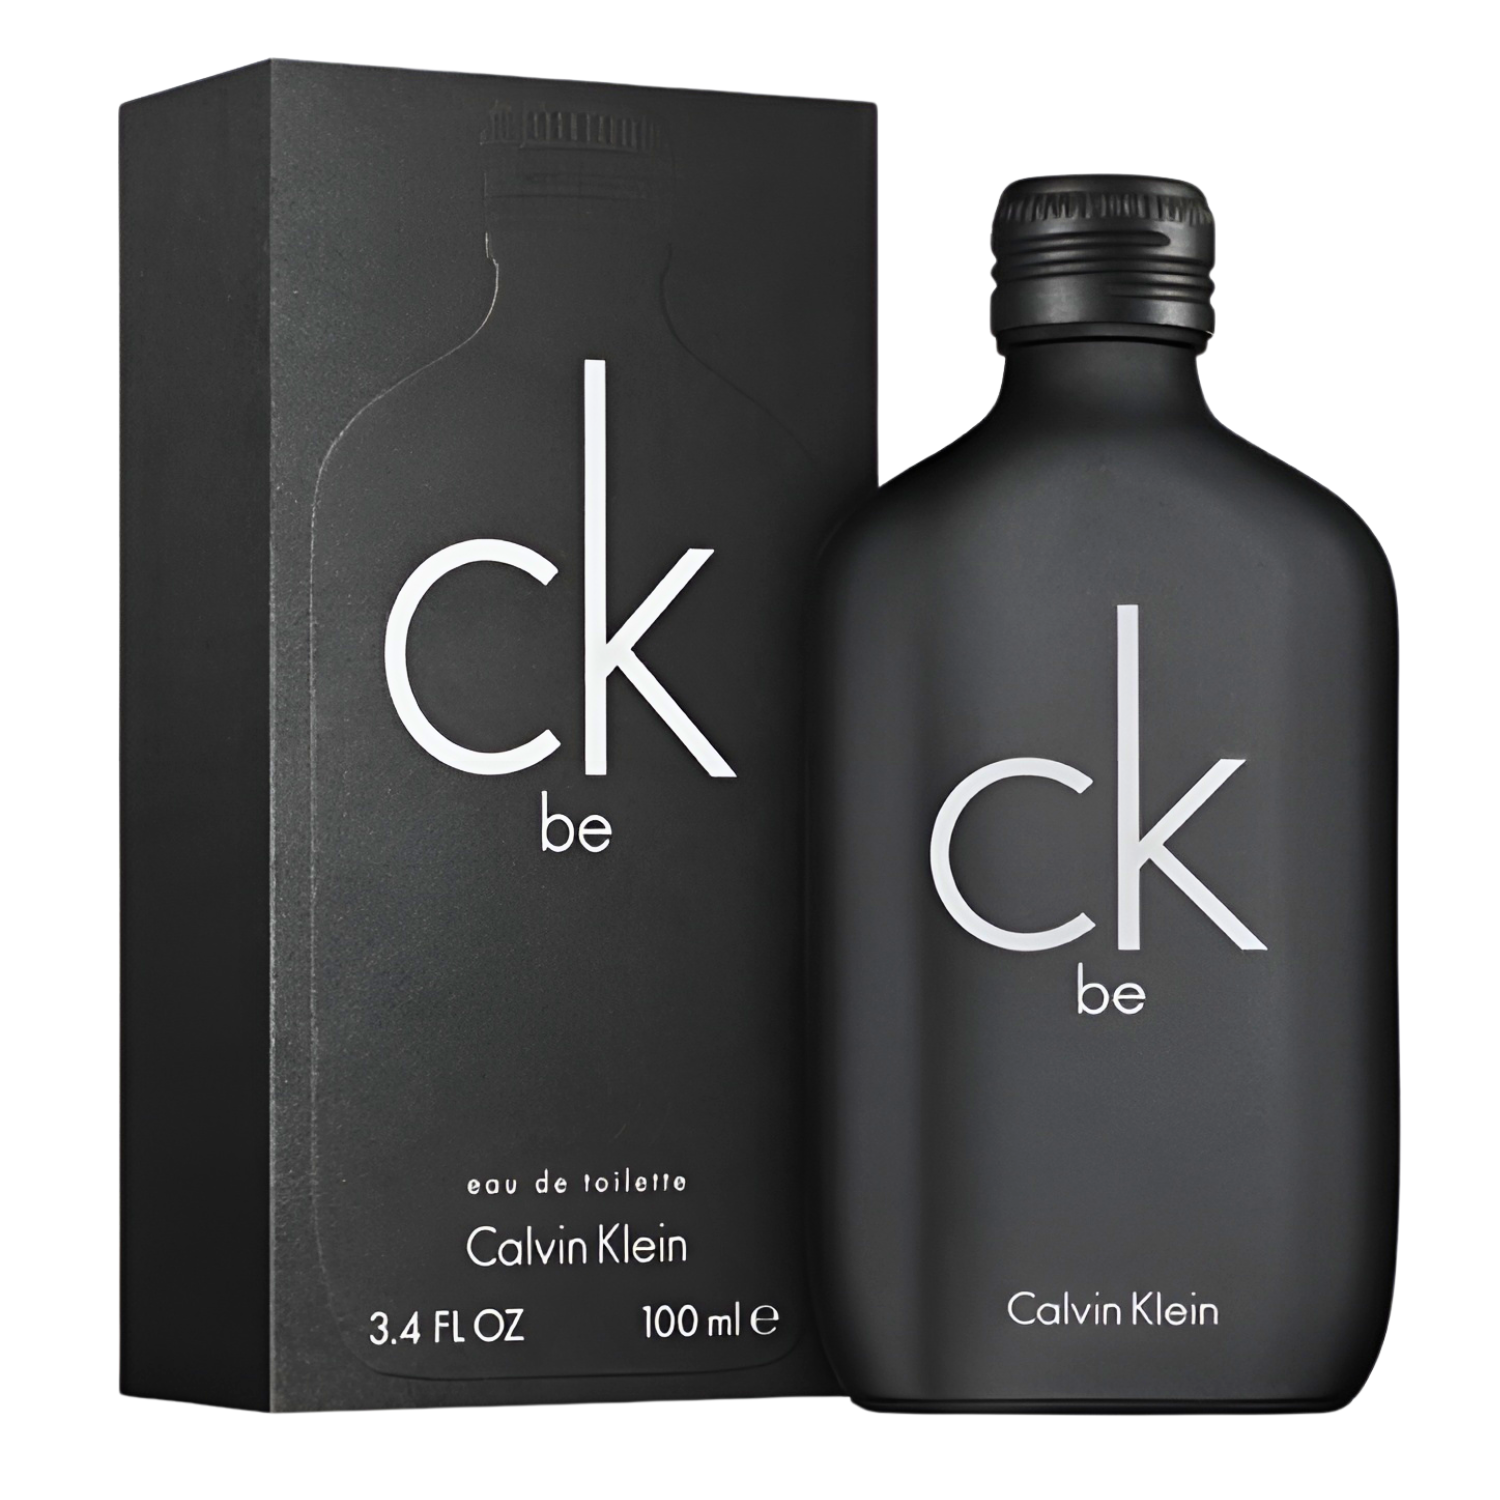 CK Be EDT (Black) 100ml / 200ml